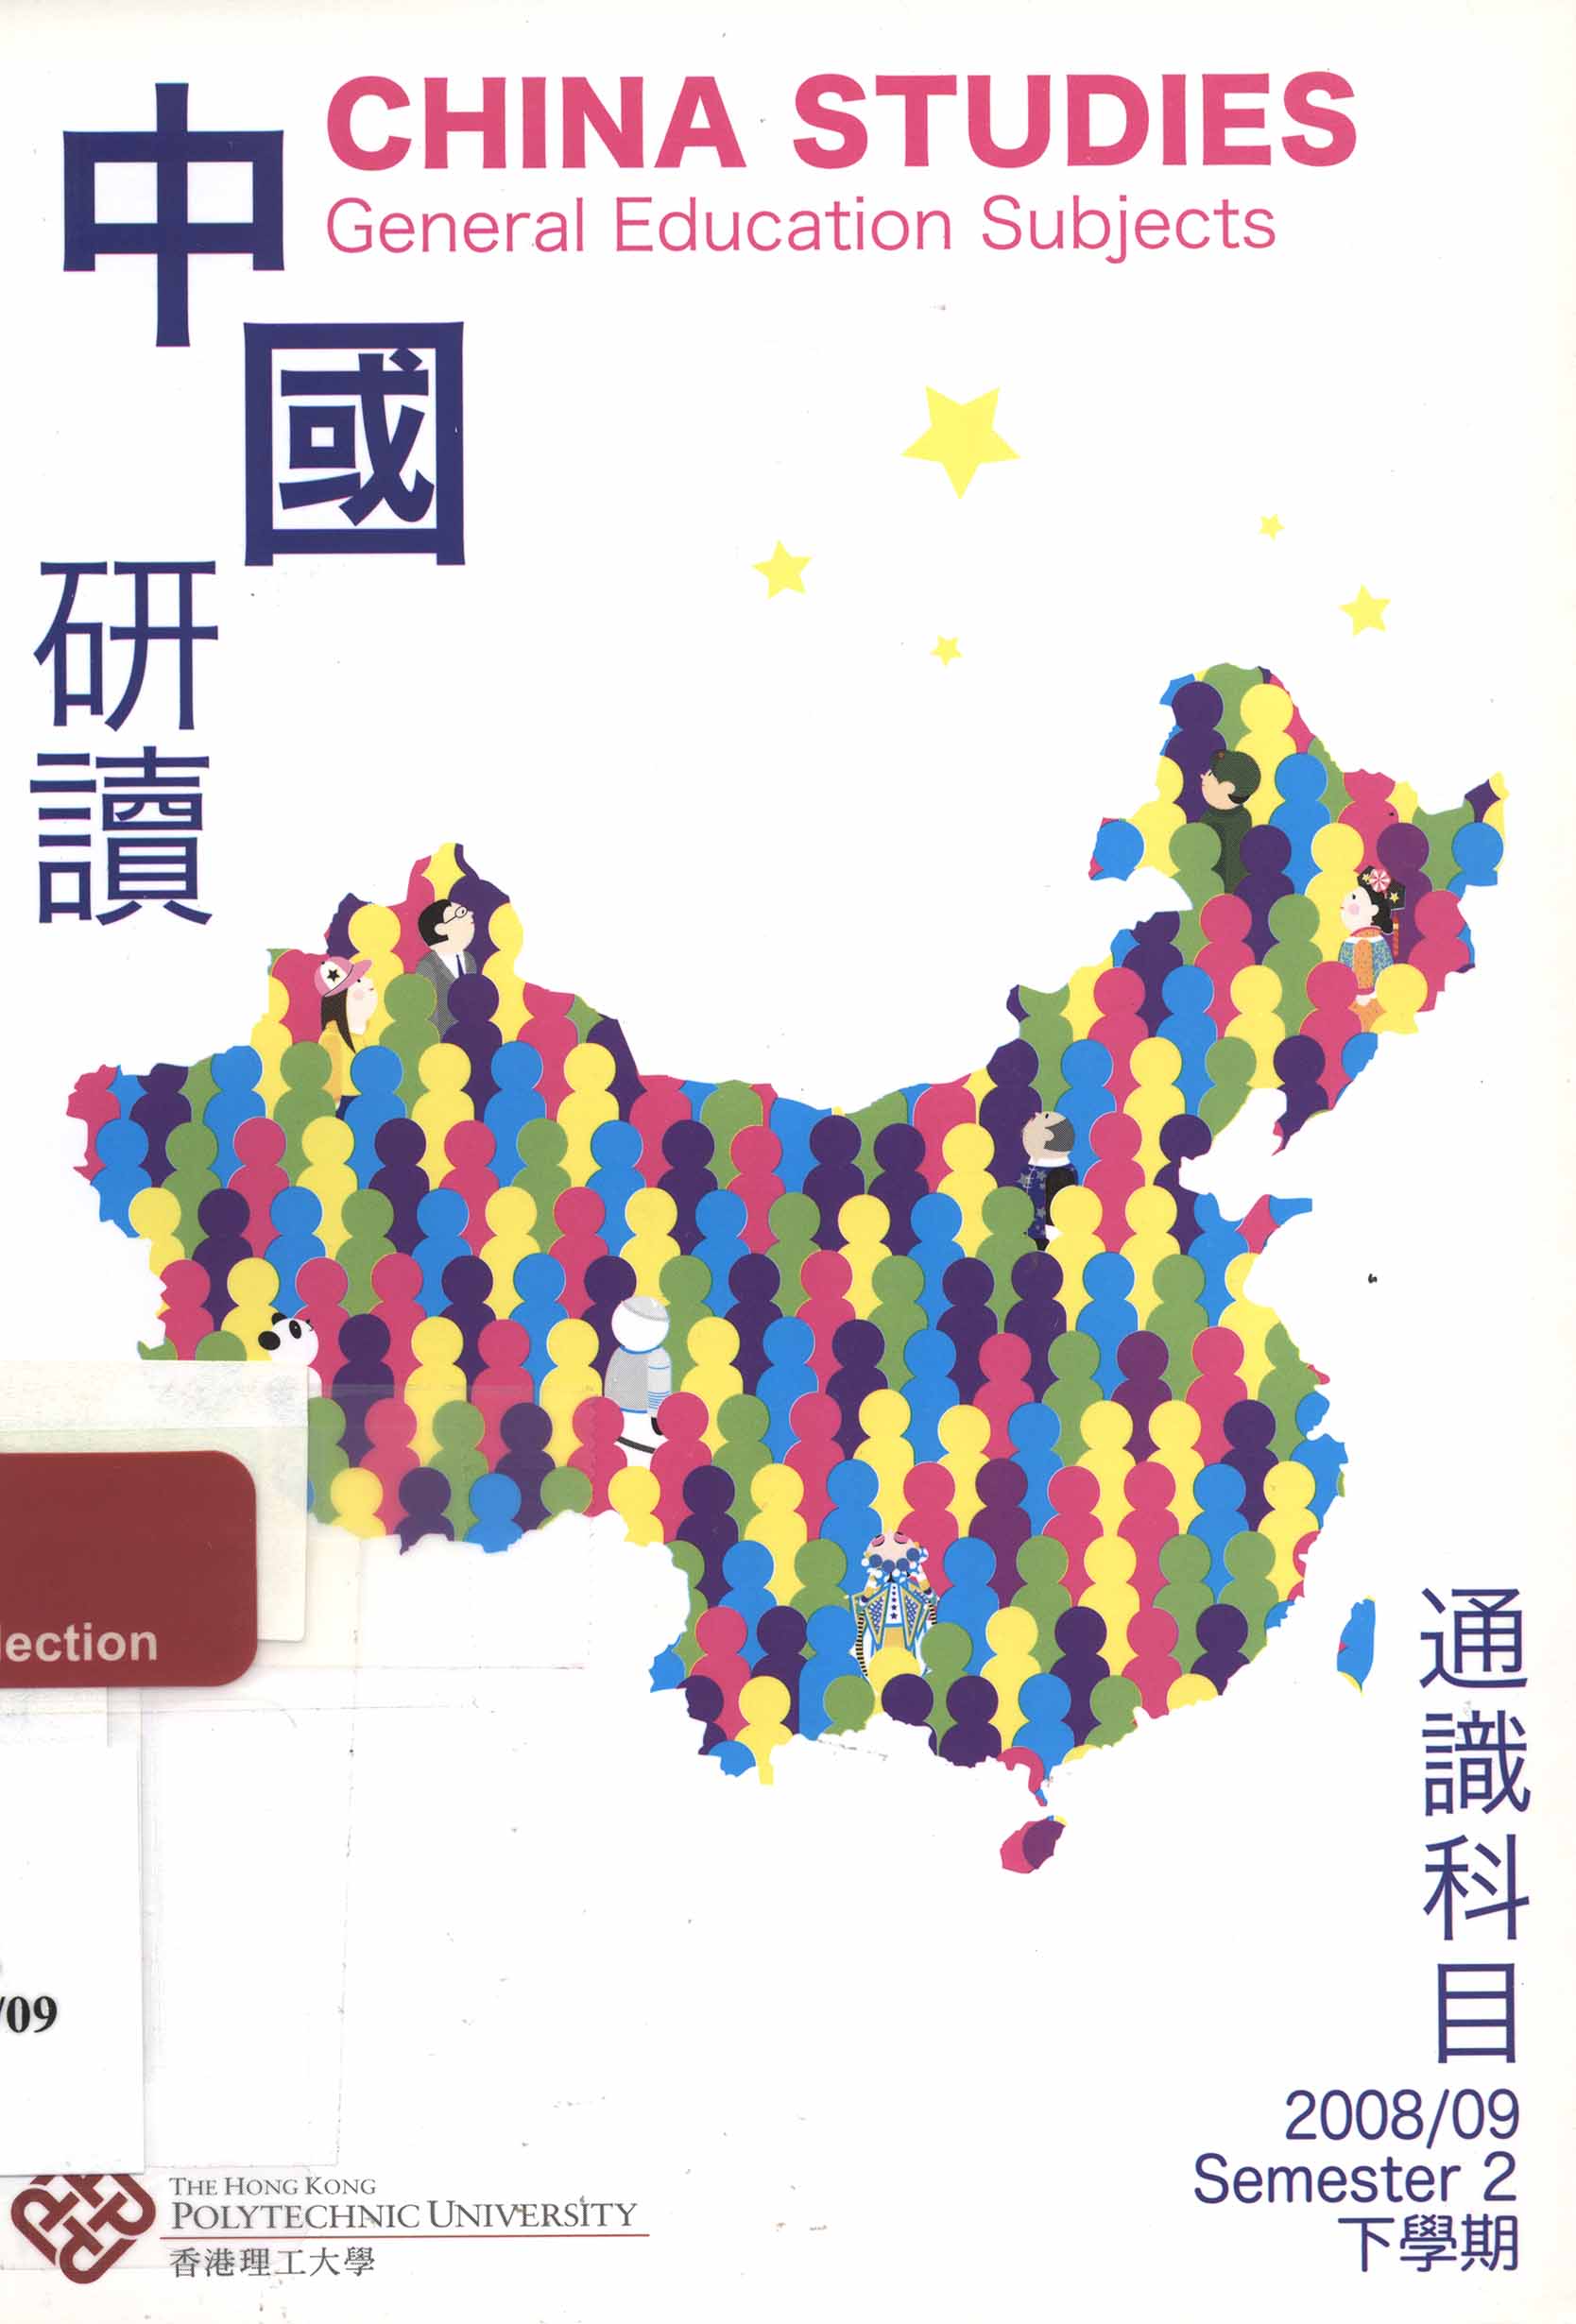 China studies general education subject [Semester 2 of 2008/09]